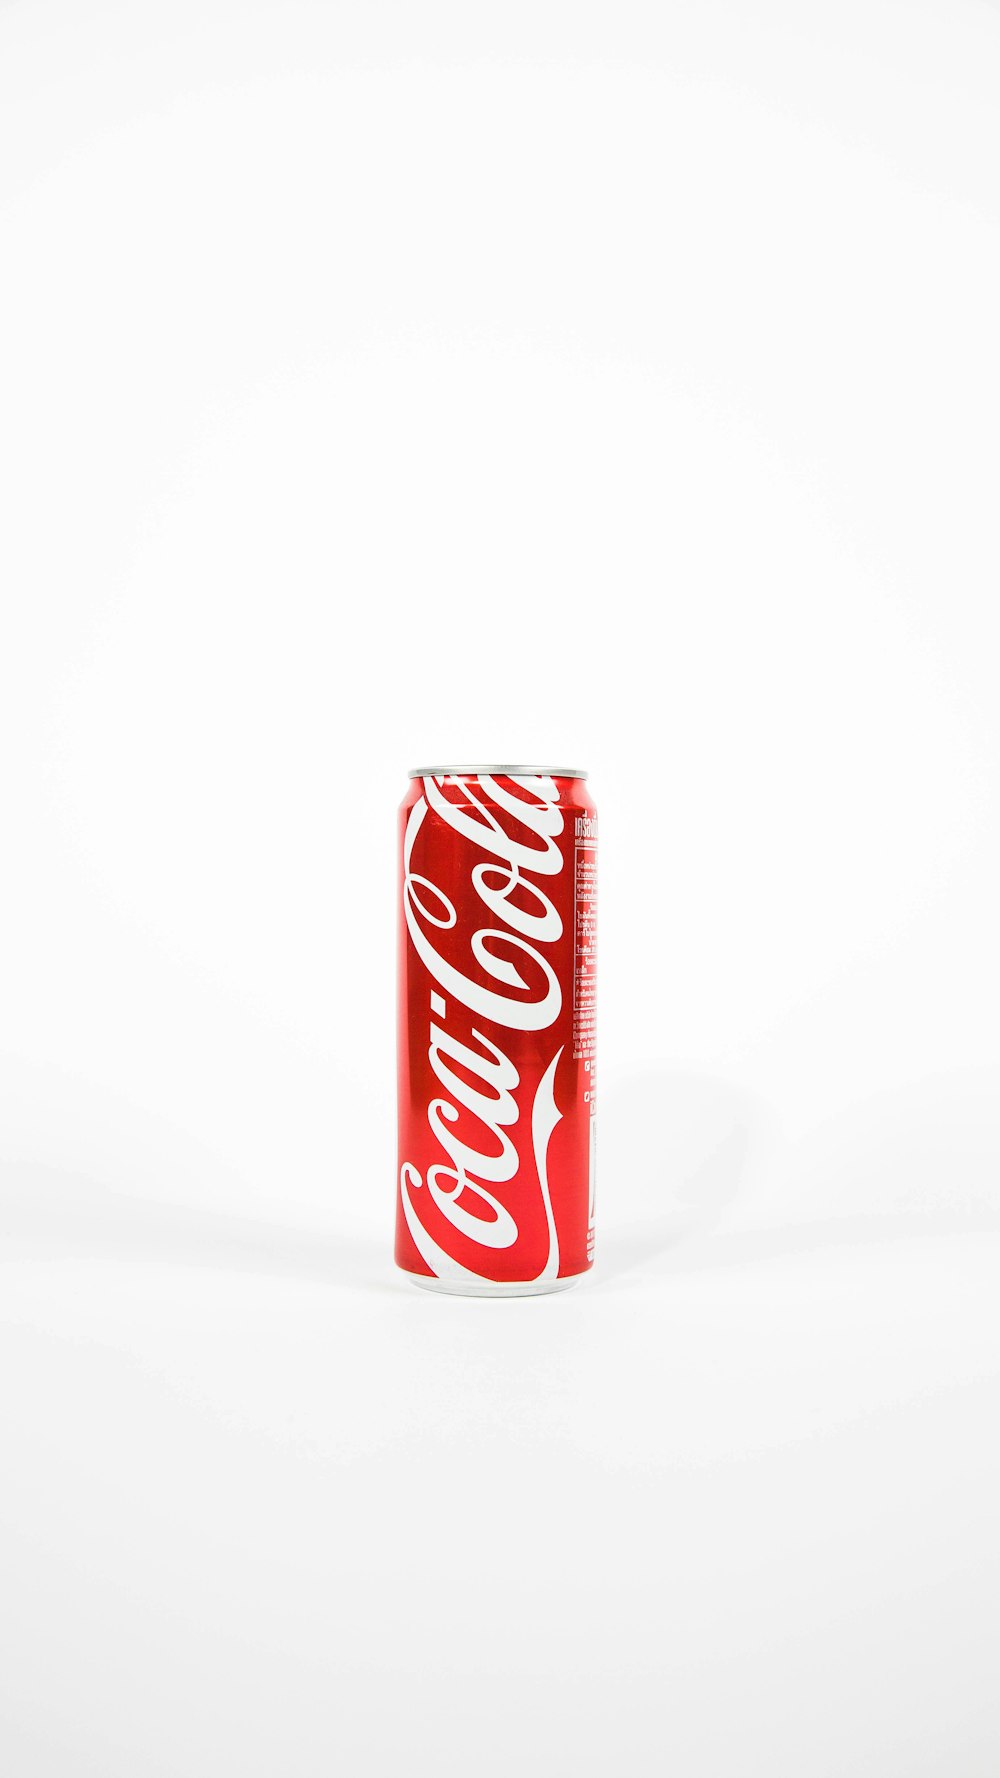 lattina di Coca-Cola rossa